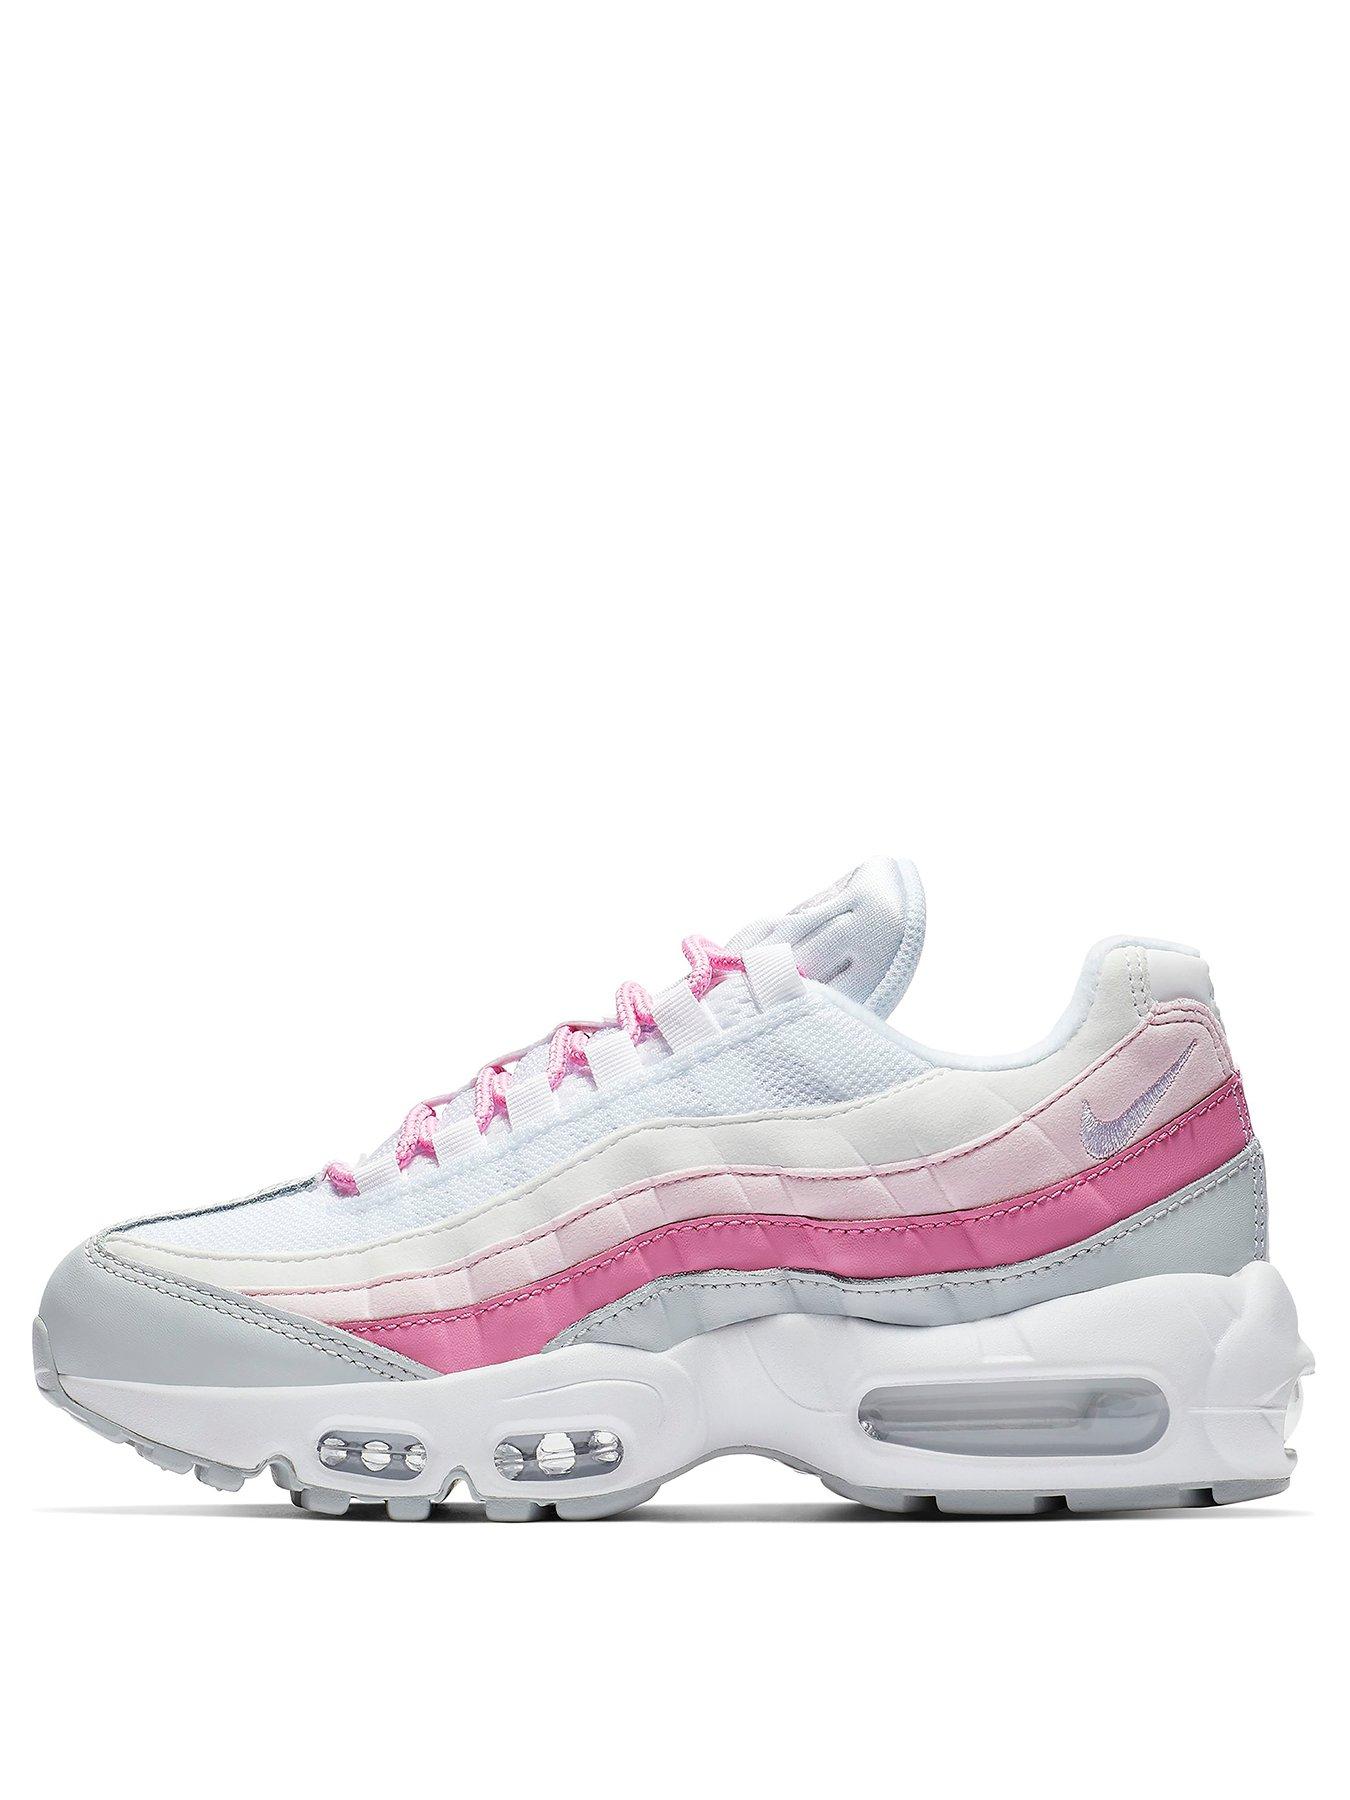 air max 95 pink white